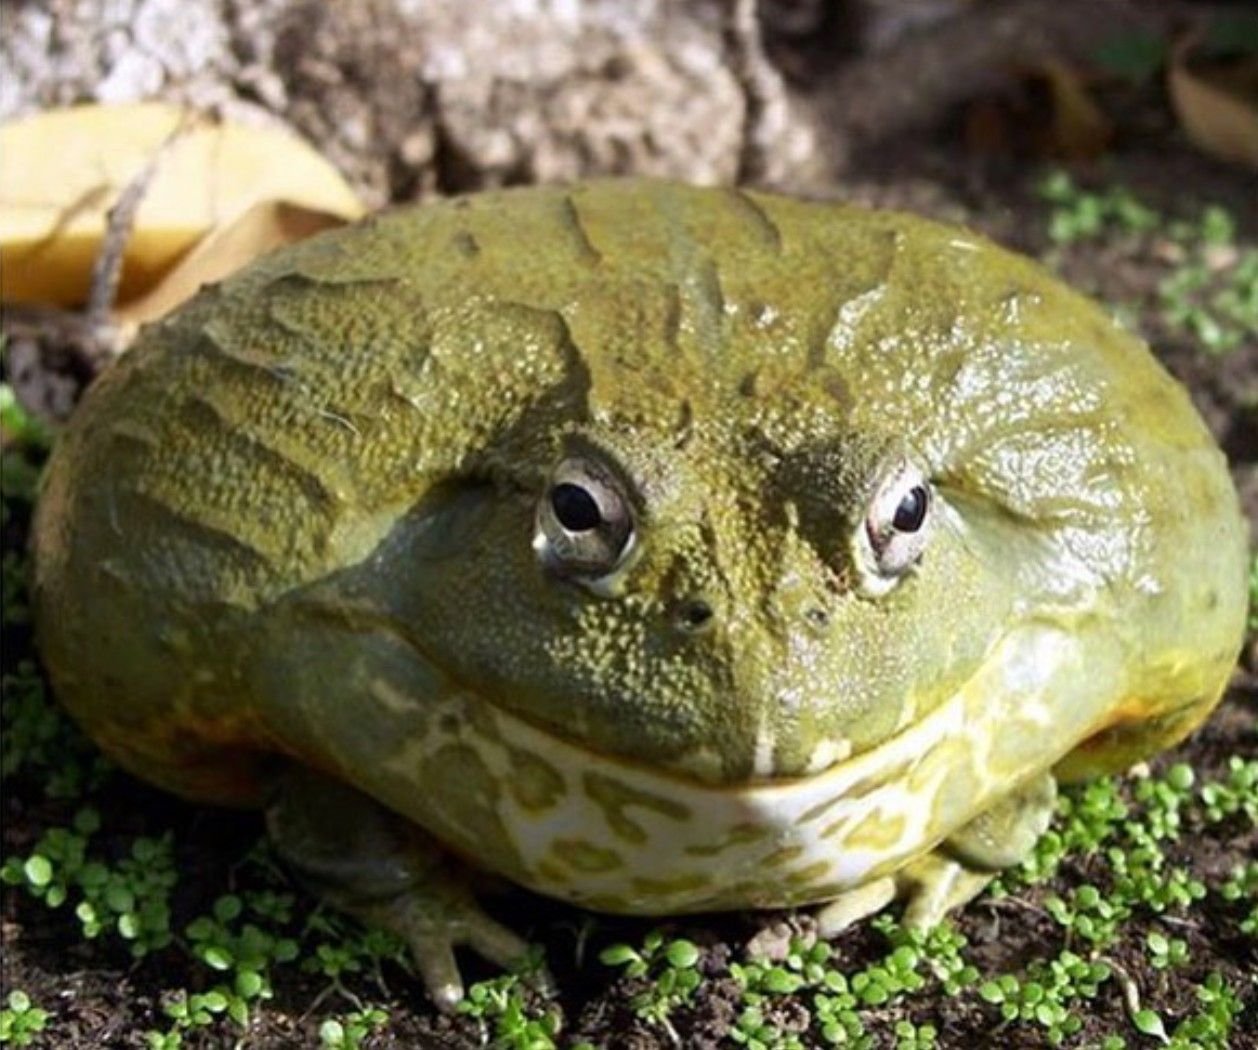 Elephant frog. Лягушка бык водонос. Африканский водонос лягушка. Лягушка-водонос (Pyxicephalus adspersus).